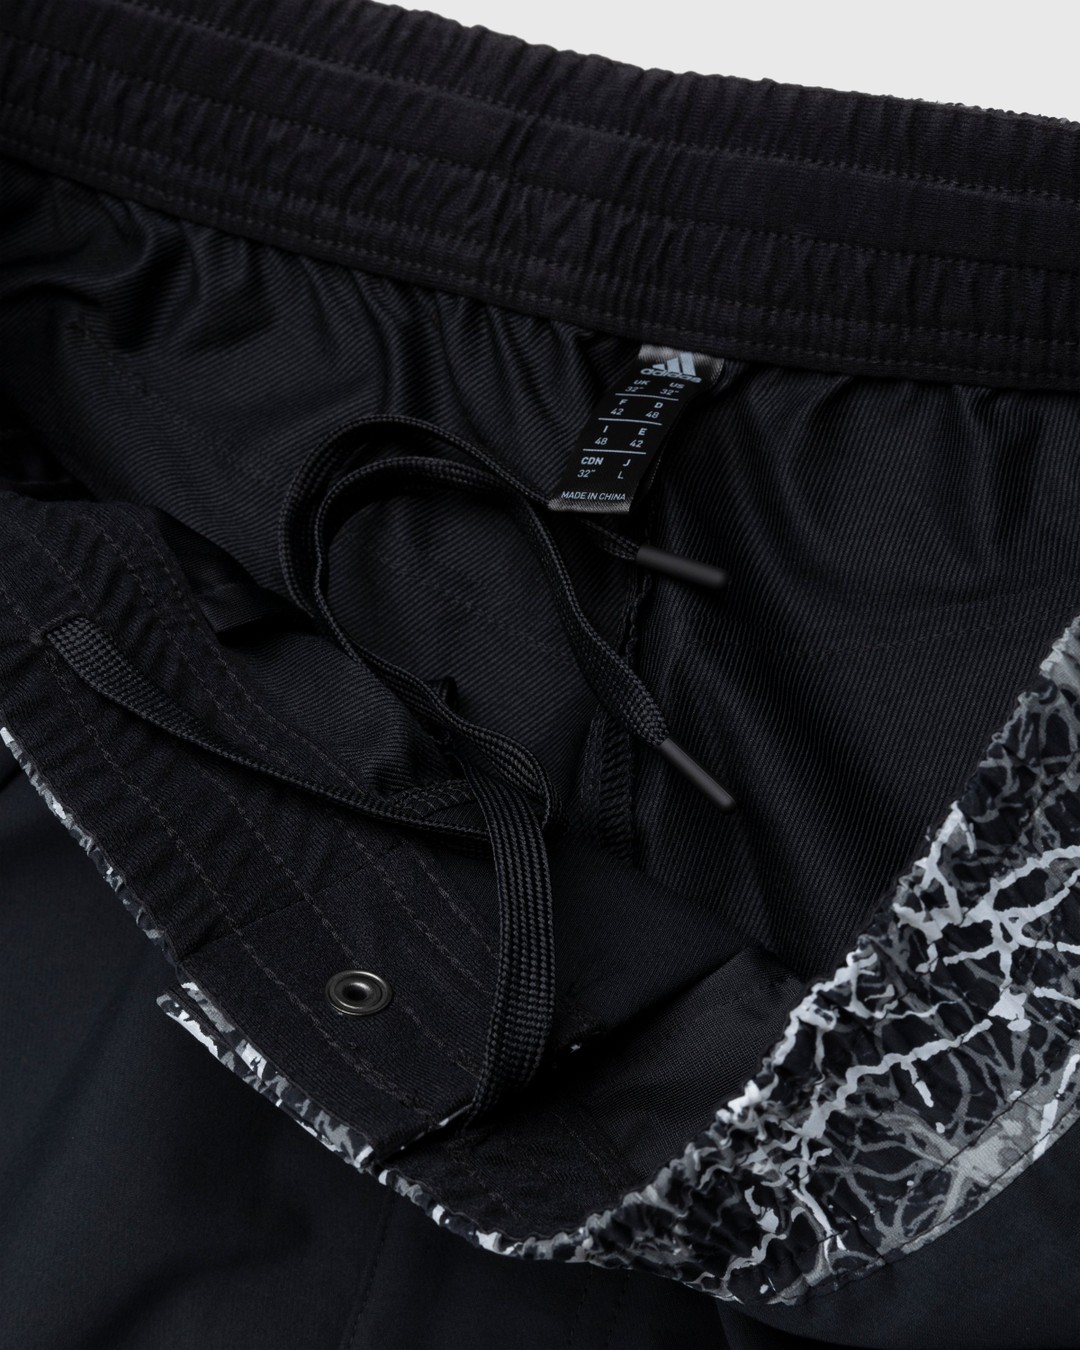 Adidas x And Wander – TERREX Hiking Pants Black - Pants - Black - Image 5